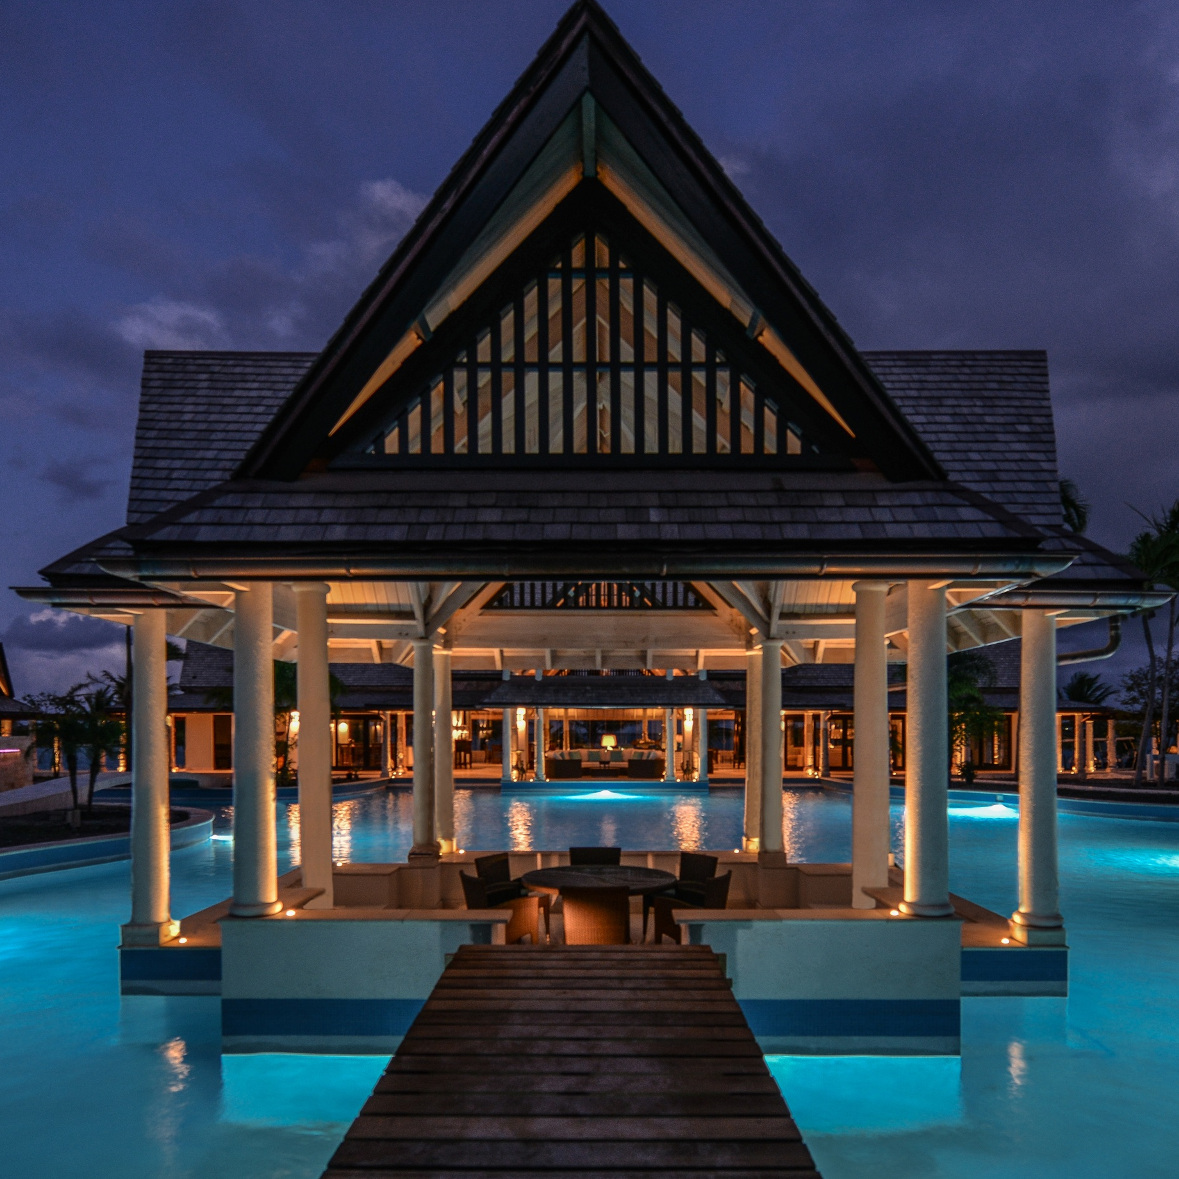 Lapicida at Luxury Residence in Caribbean